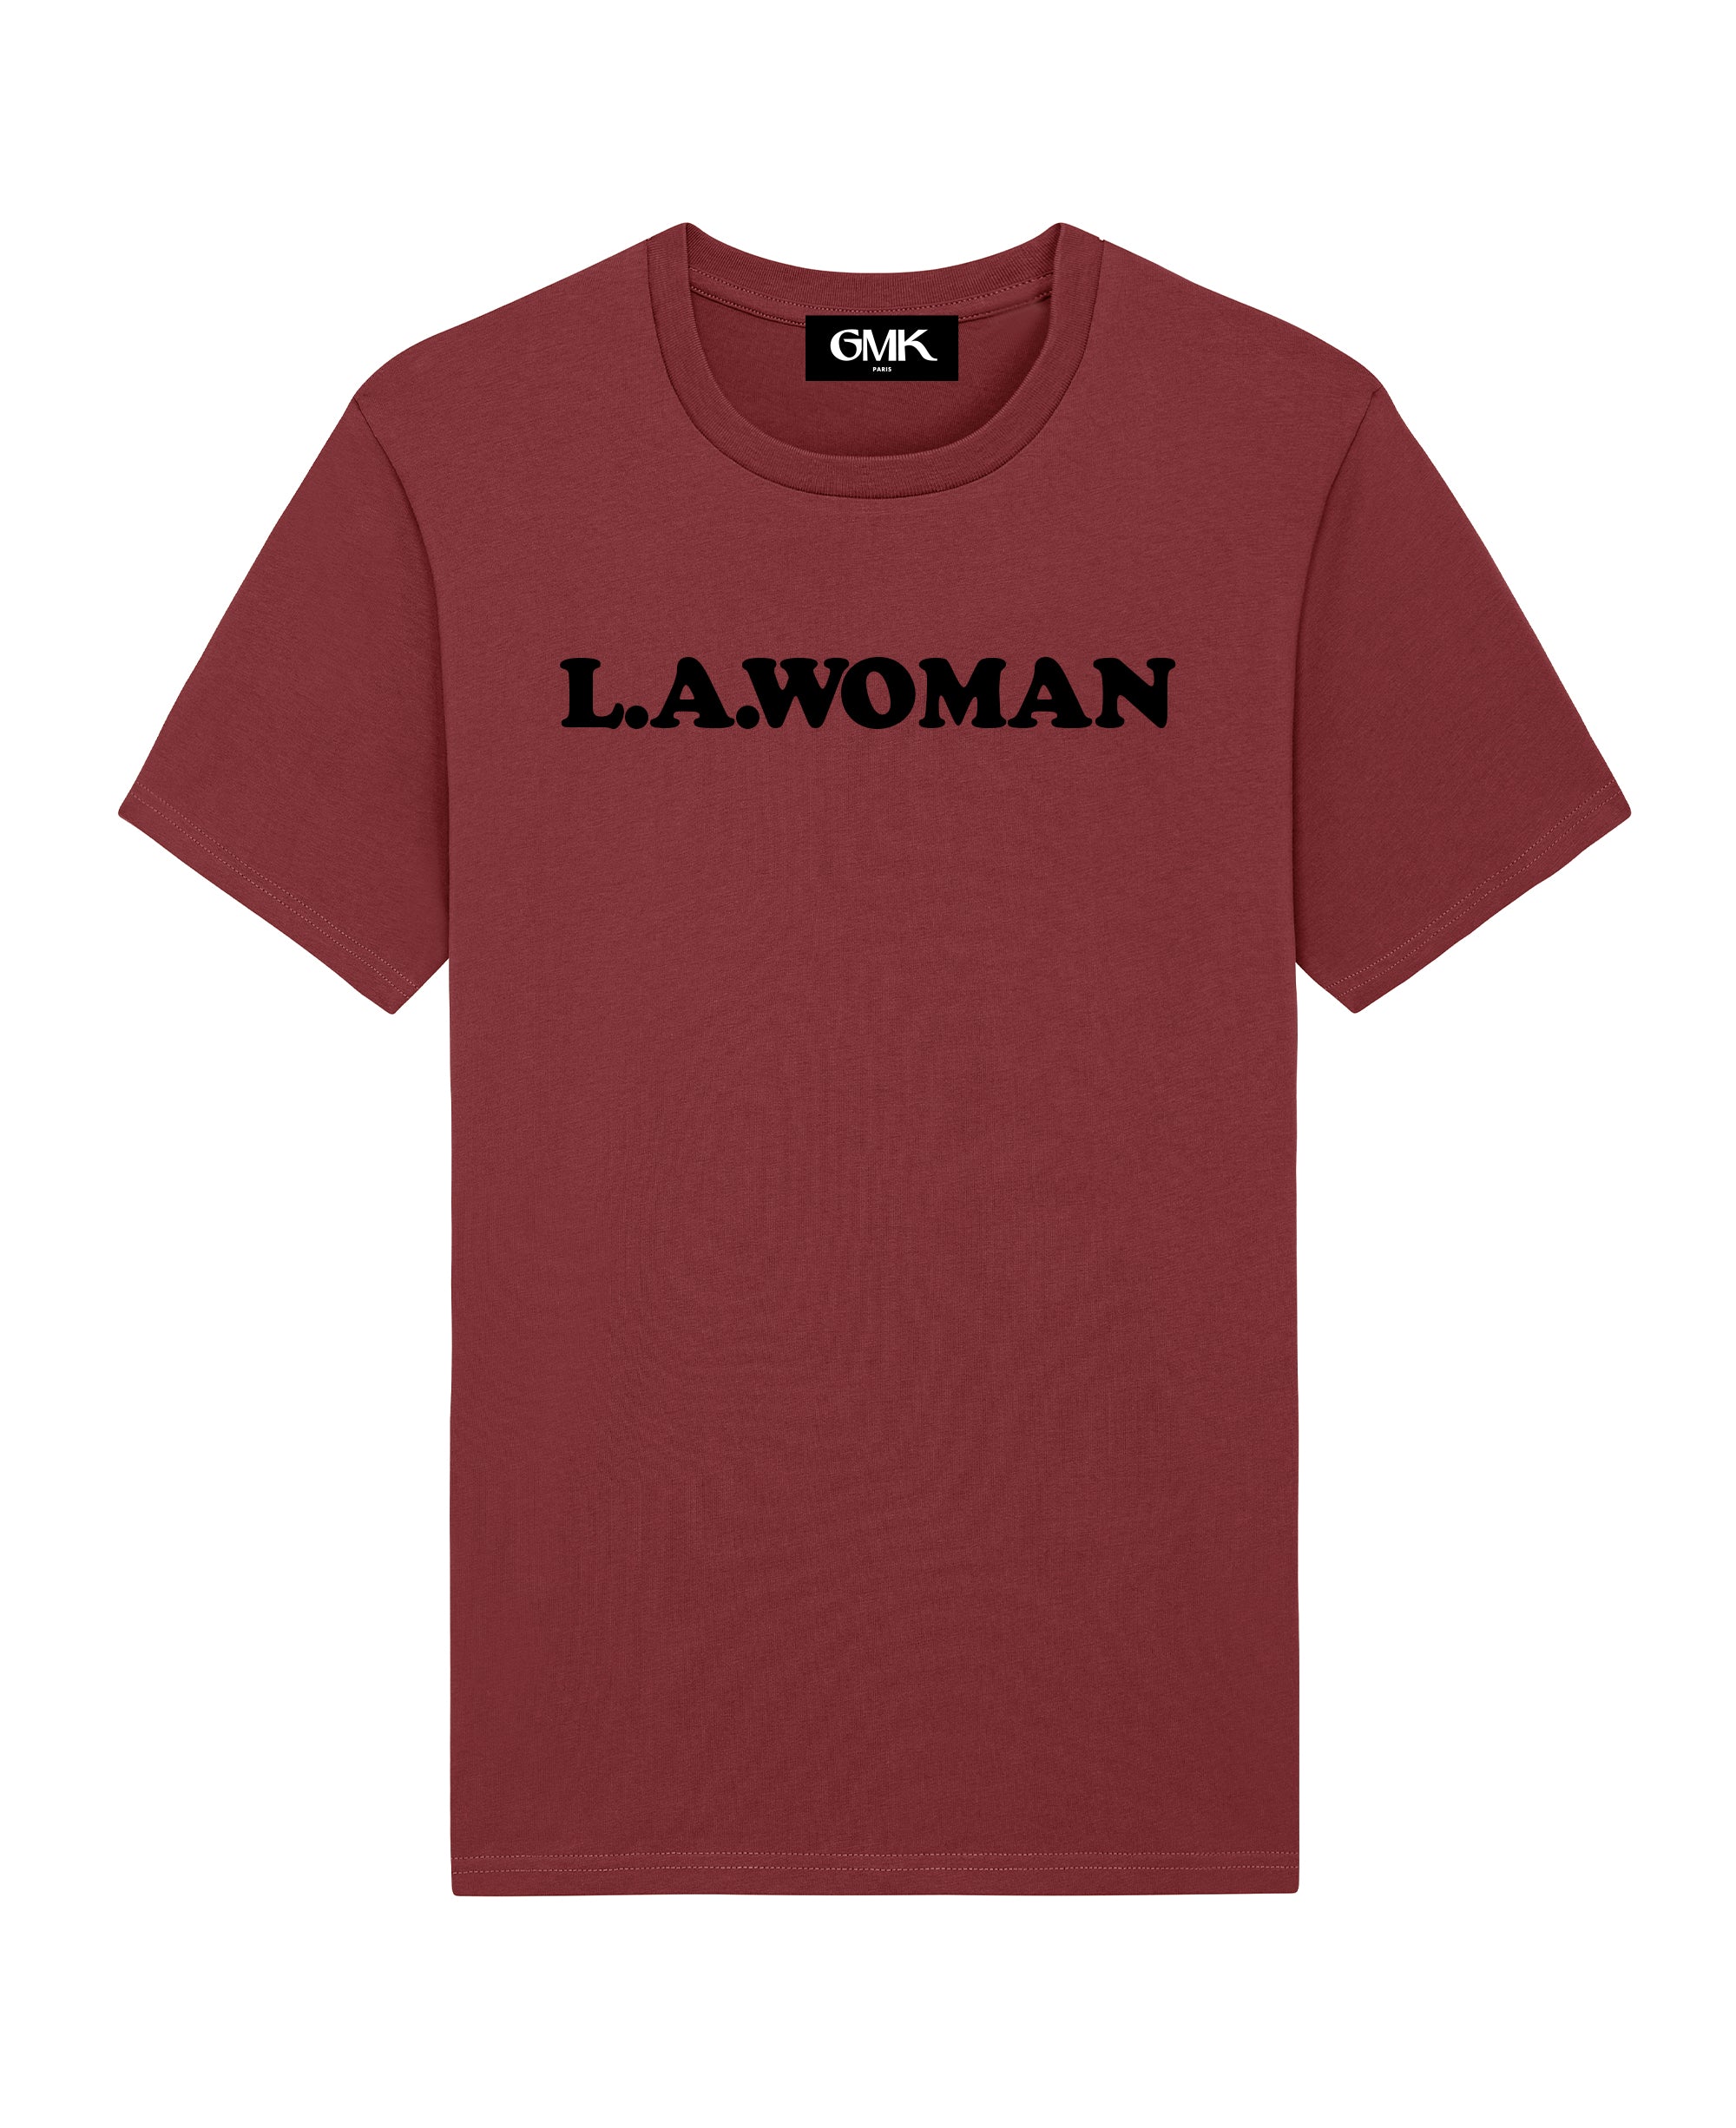 L.A.WOMAN T-shirt - Keith Morning Good